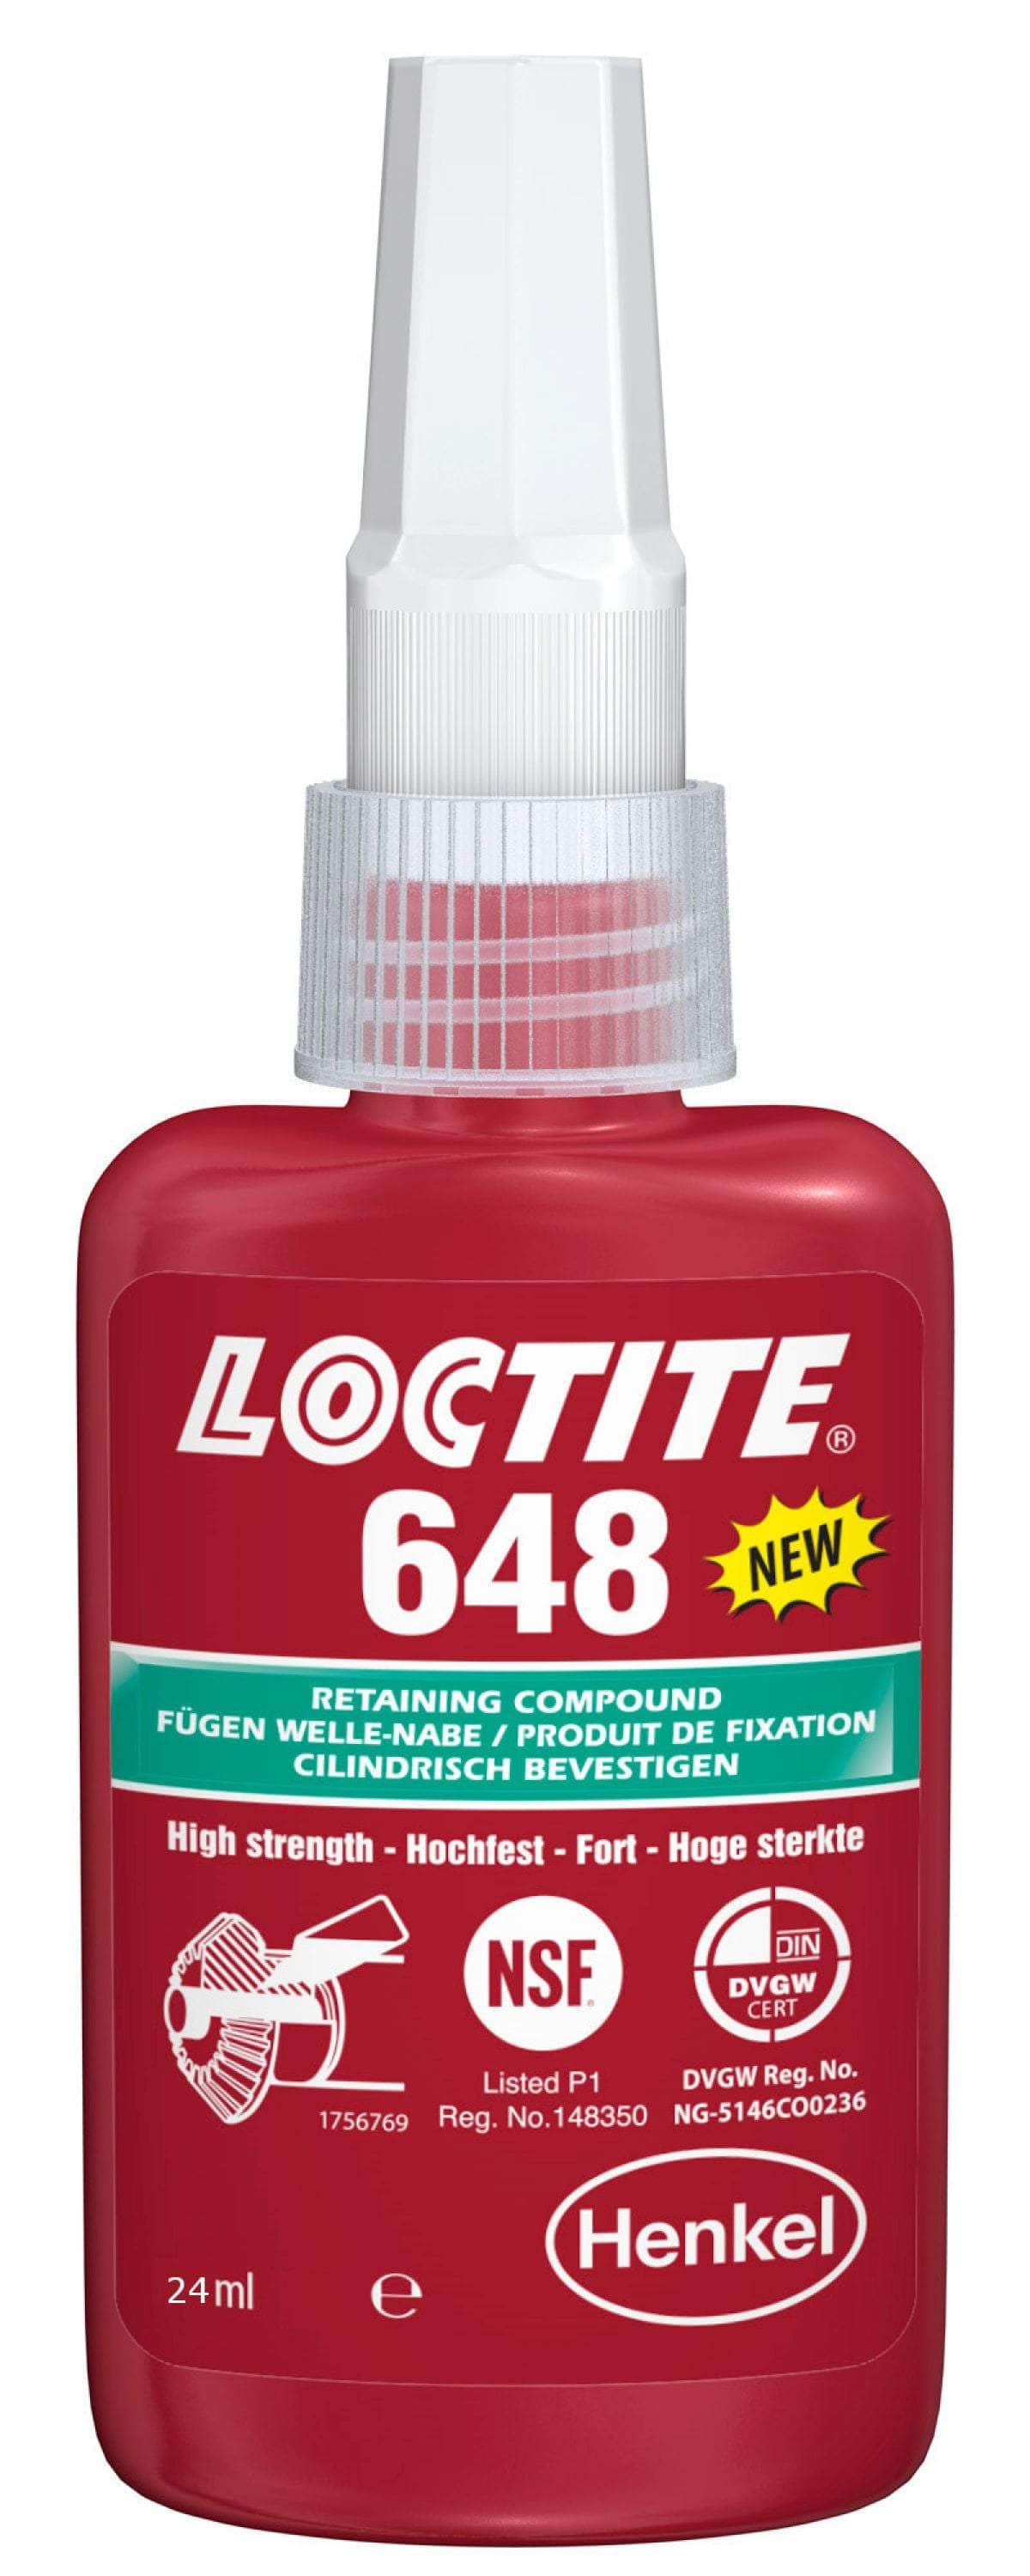 Loctite-648-50ml LOCTITE 648 de 50ml Compuesto Retenedor Resistencia Alta LOCTITE